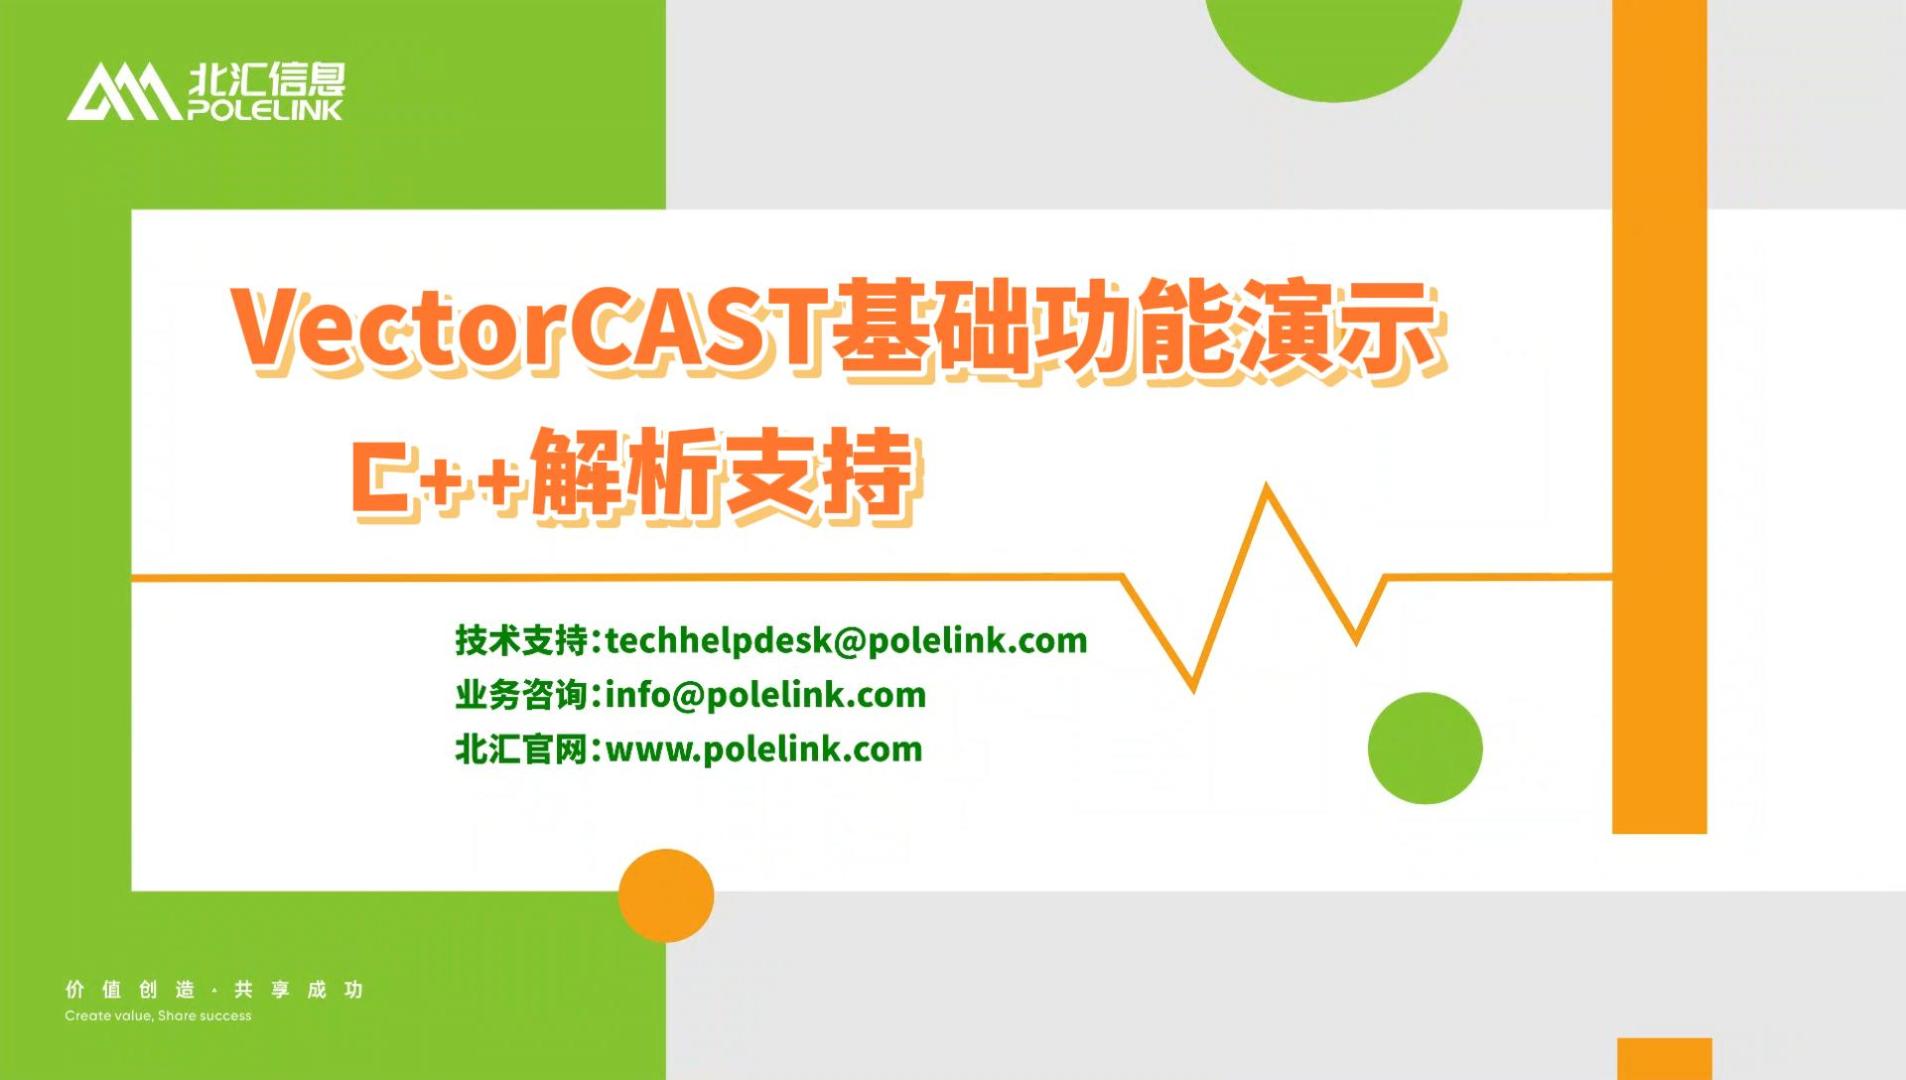 VectorCAST對C++解析支持#動態代碼測試
#VectorCAST
 